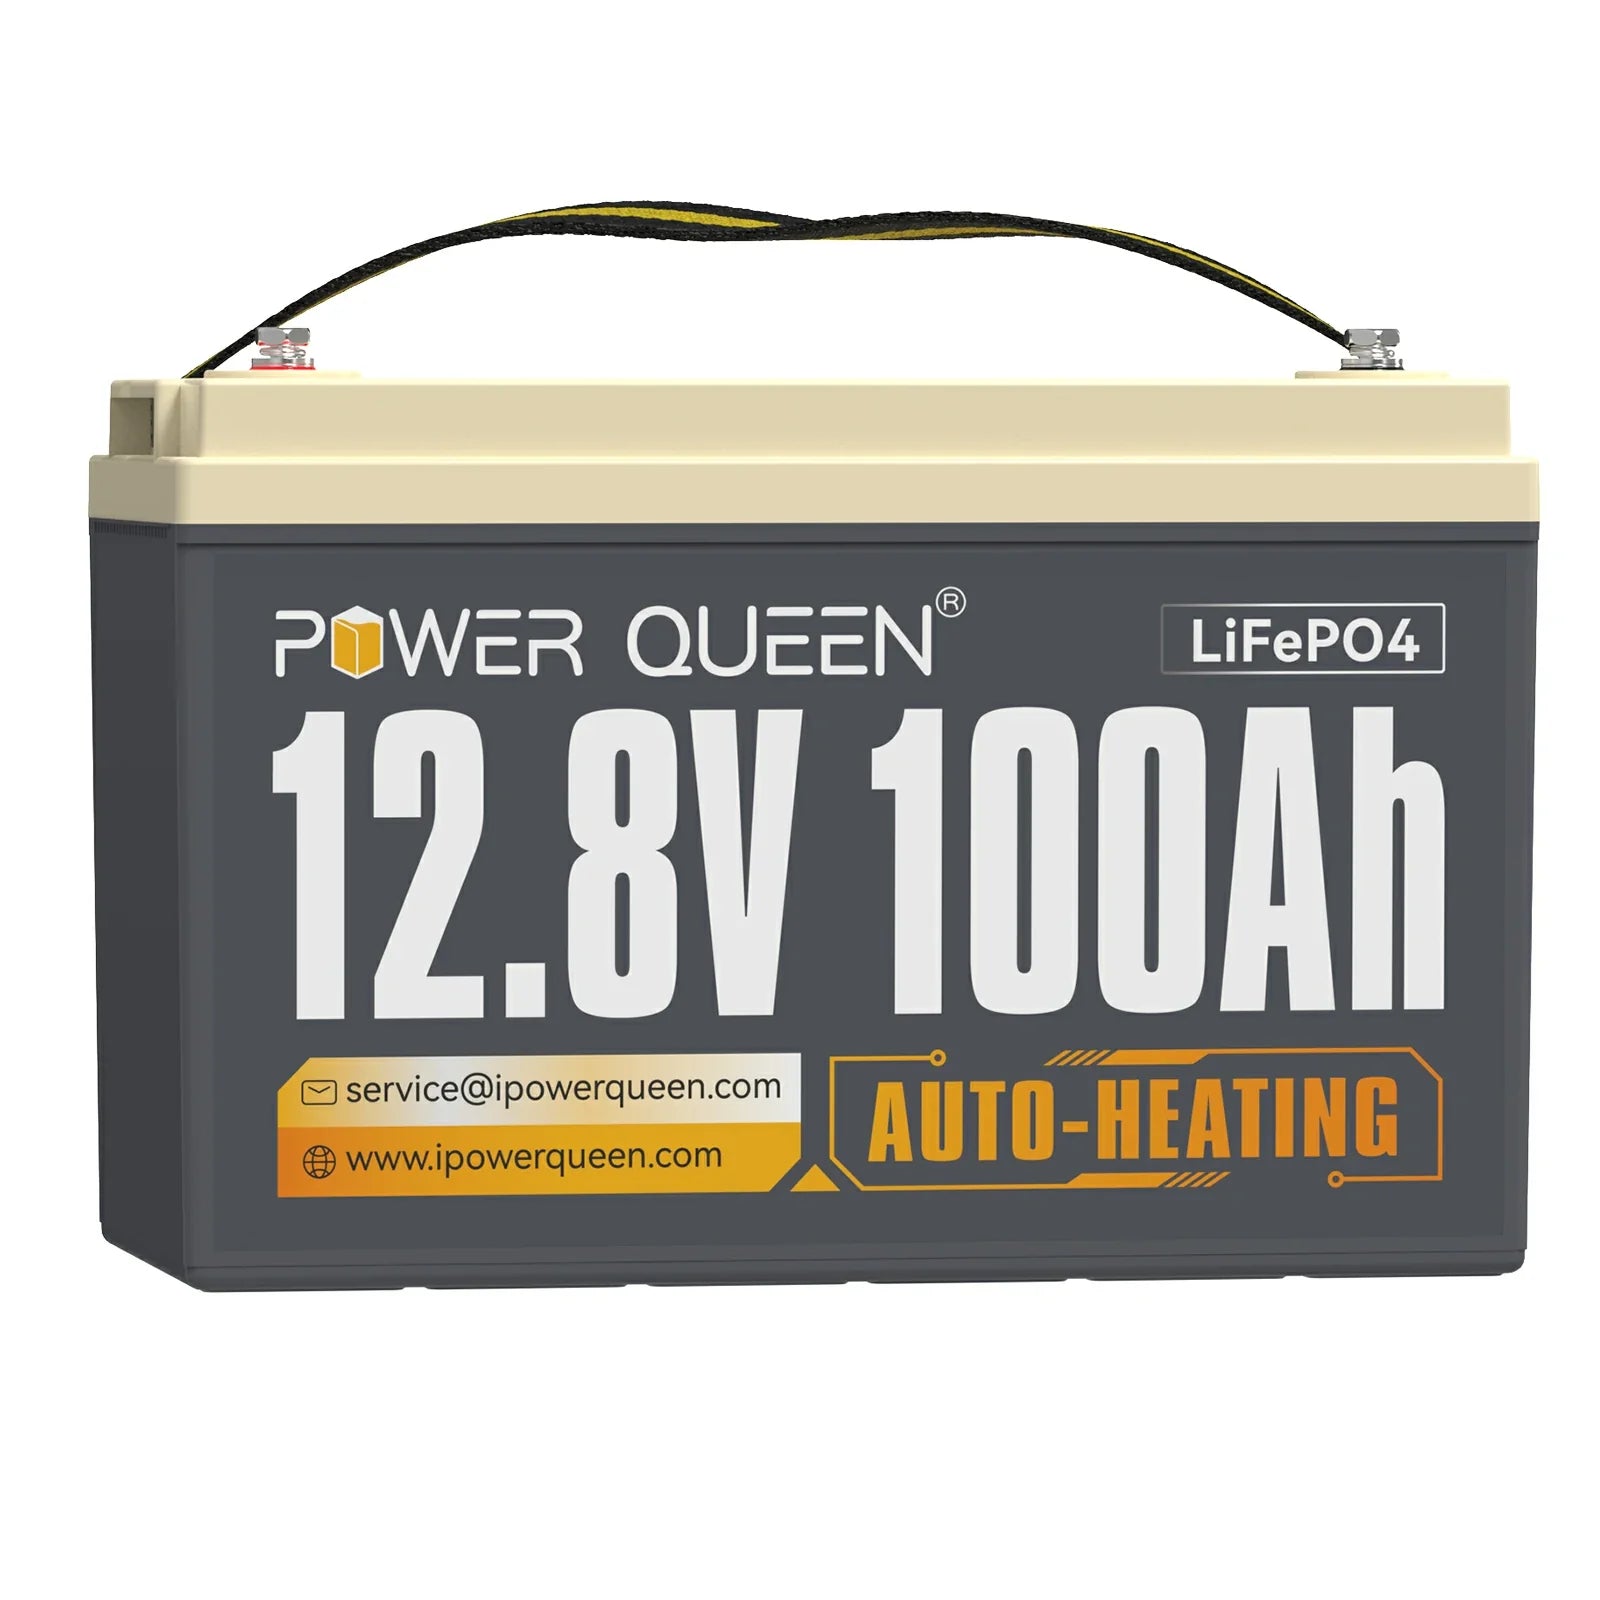 【0% Mwst.】Power Queen 12,8V 100Ah Selbstheizende LiFePO4-Akku, Eingebautes 100A BMS